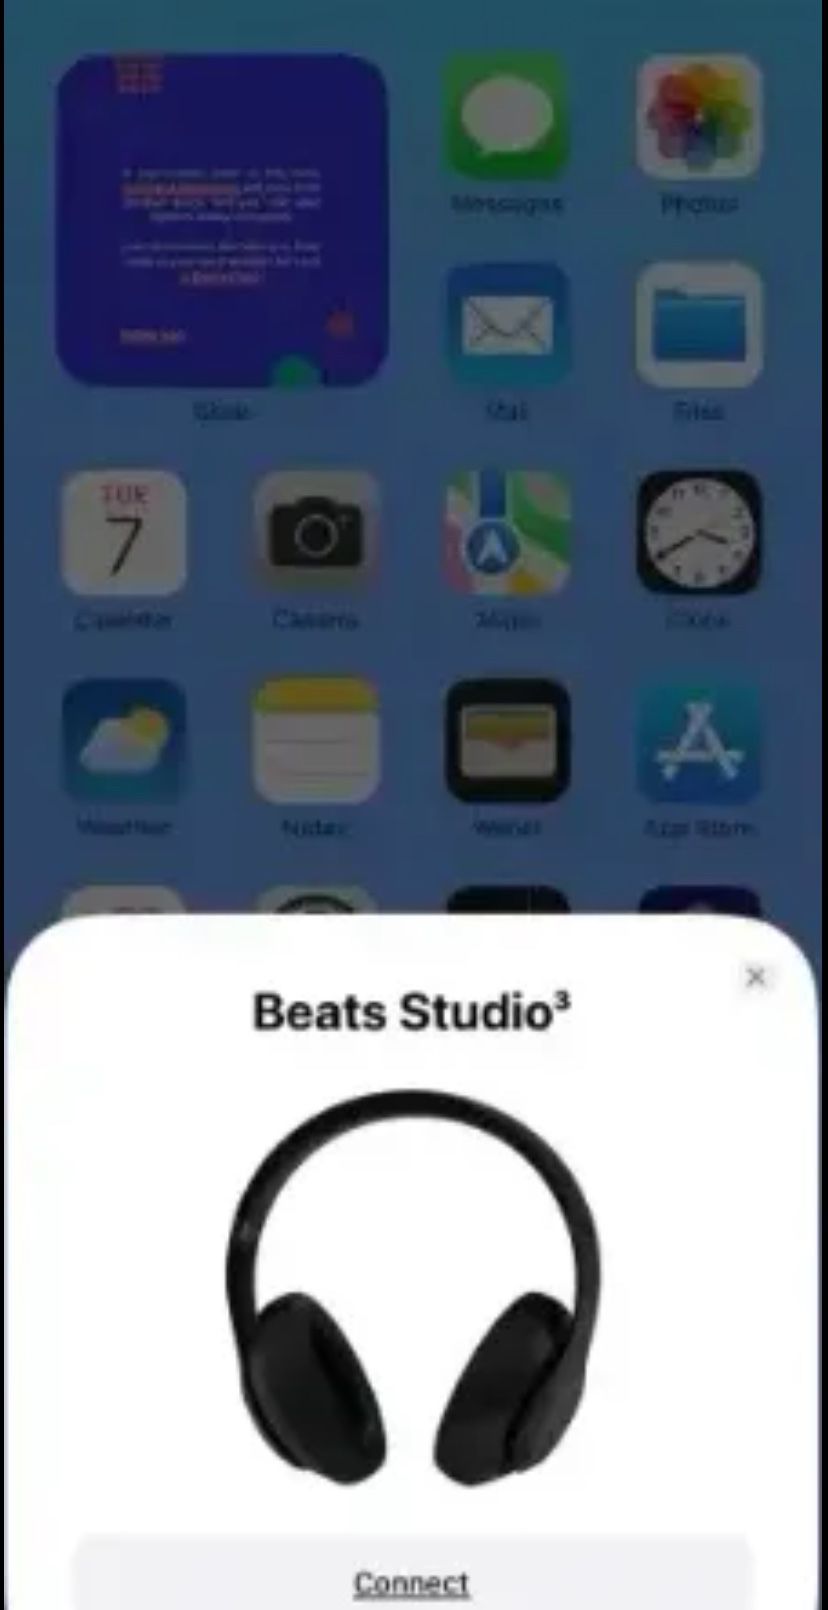  Beats Studio 3 